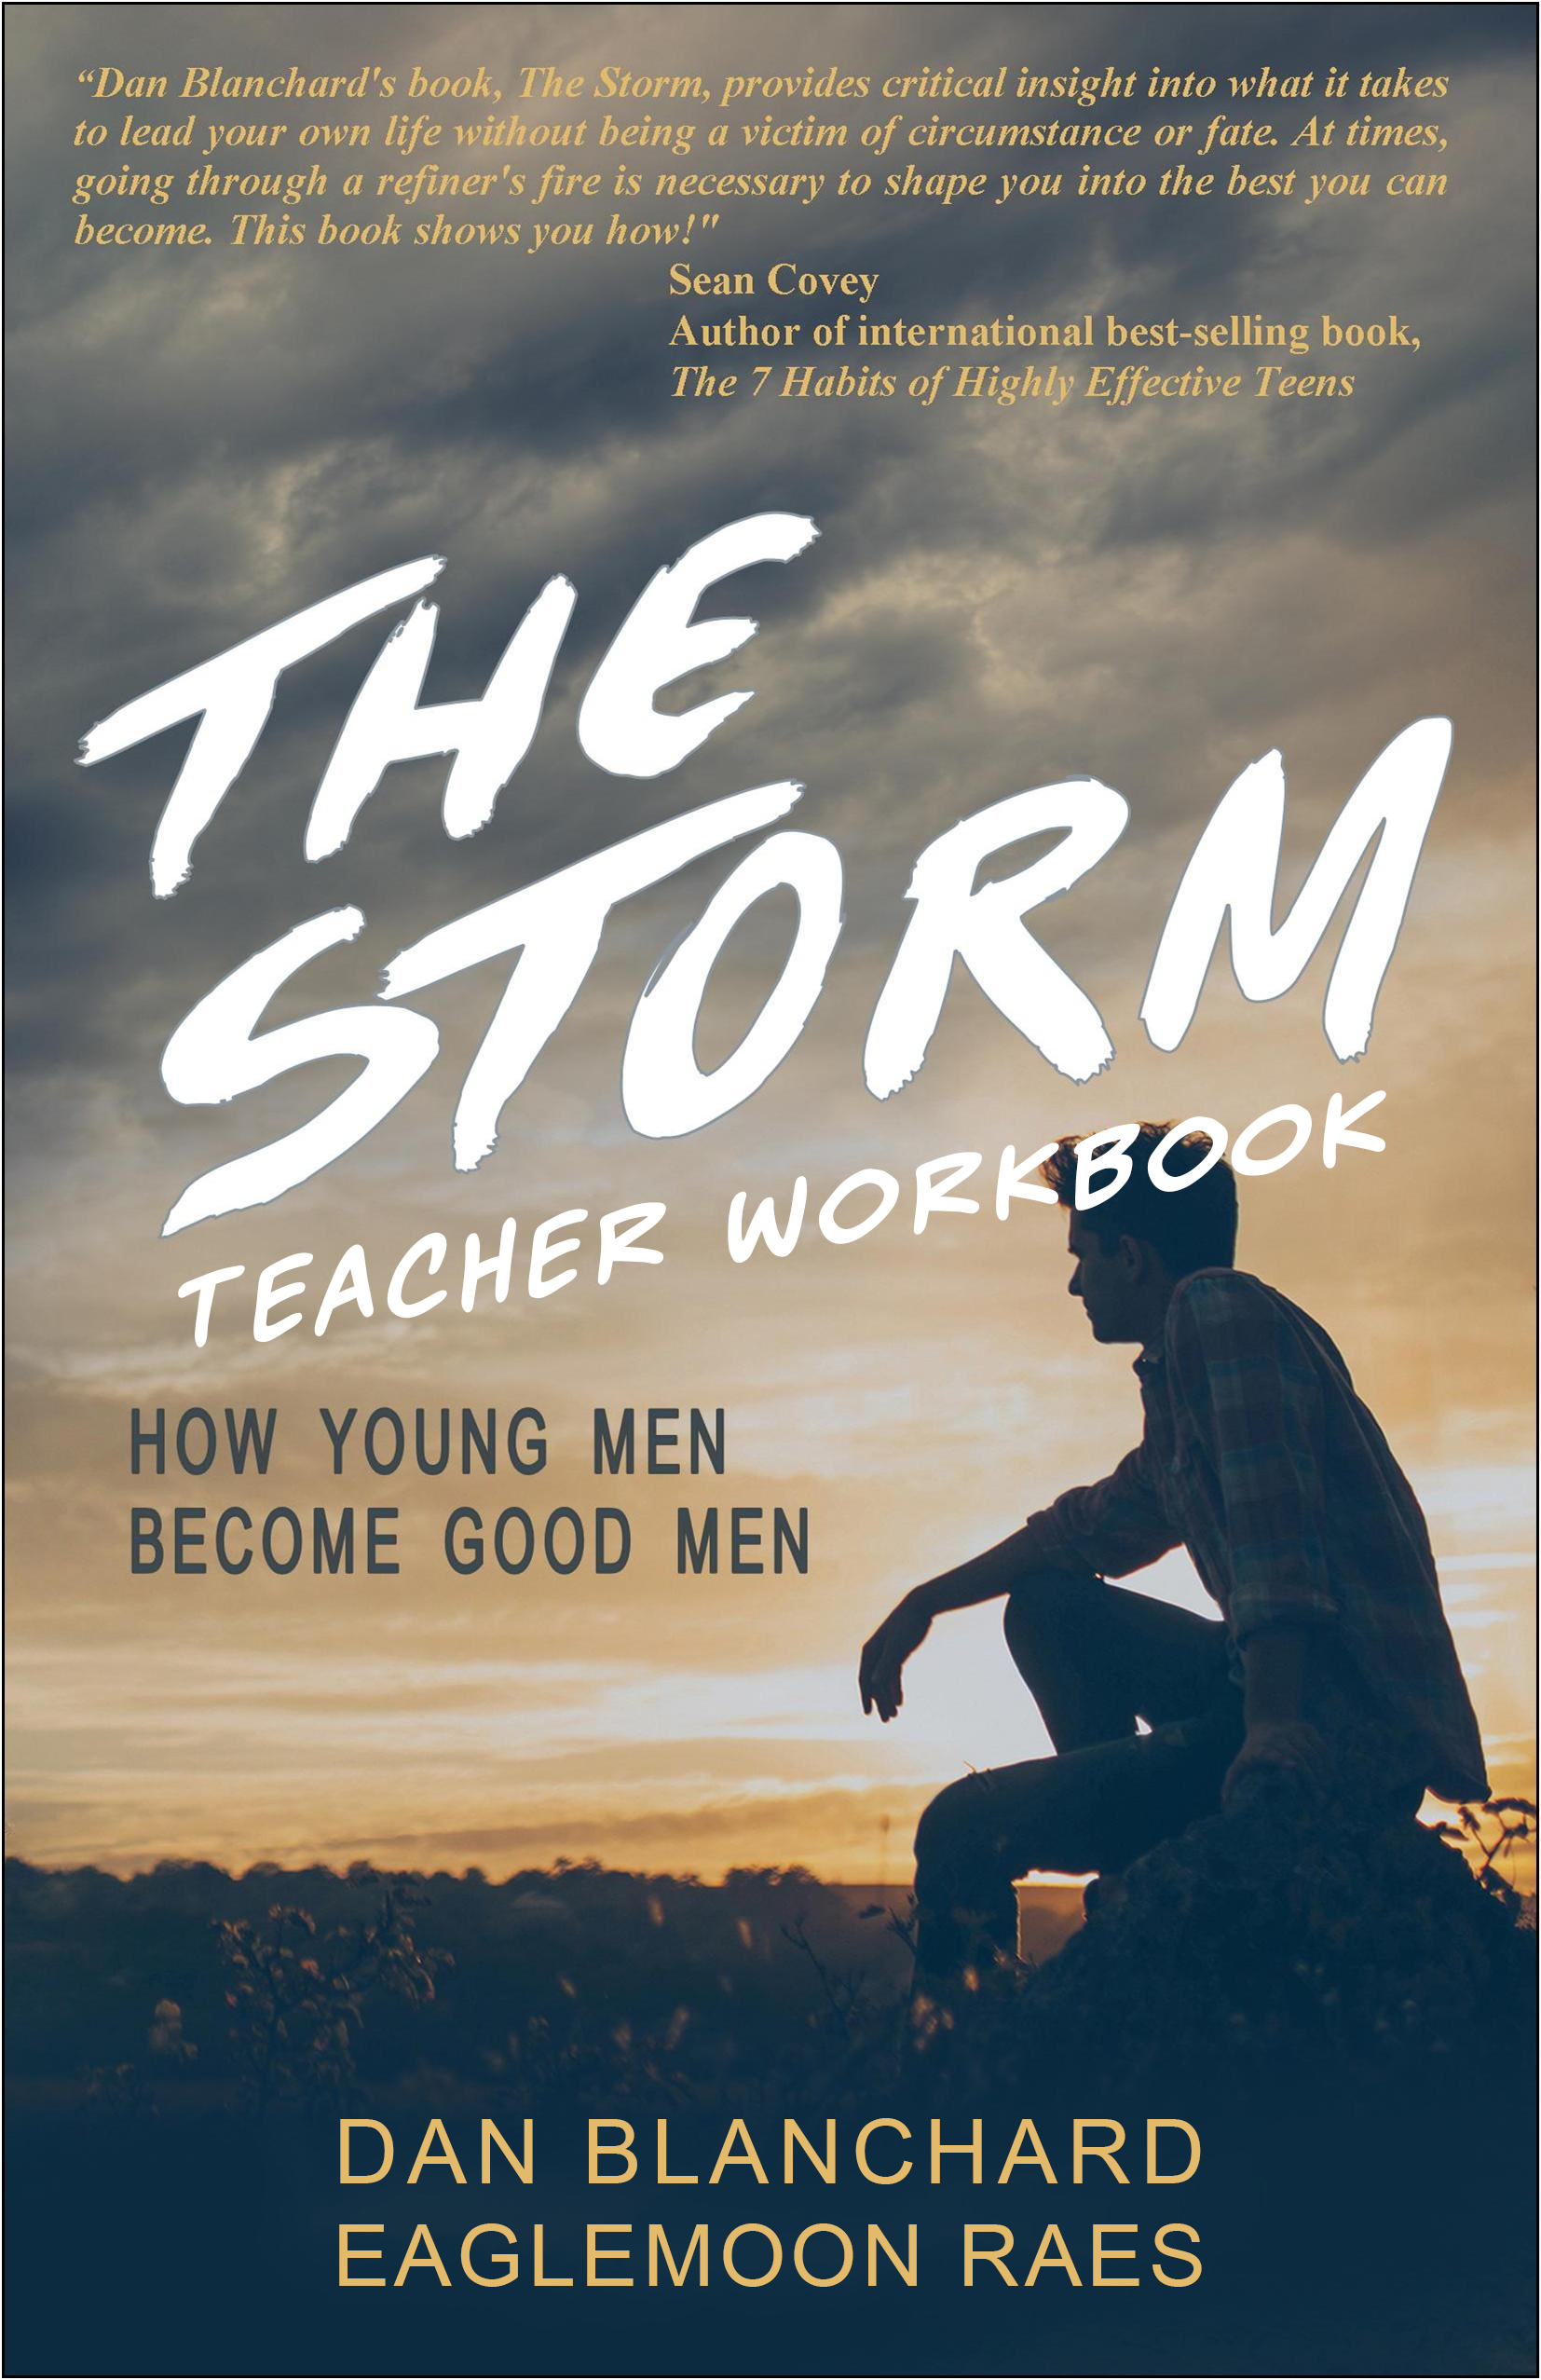 FREE: The Storm Teacher Workbook by Dan Blanchard